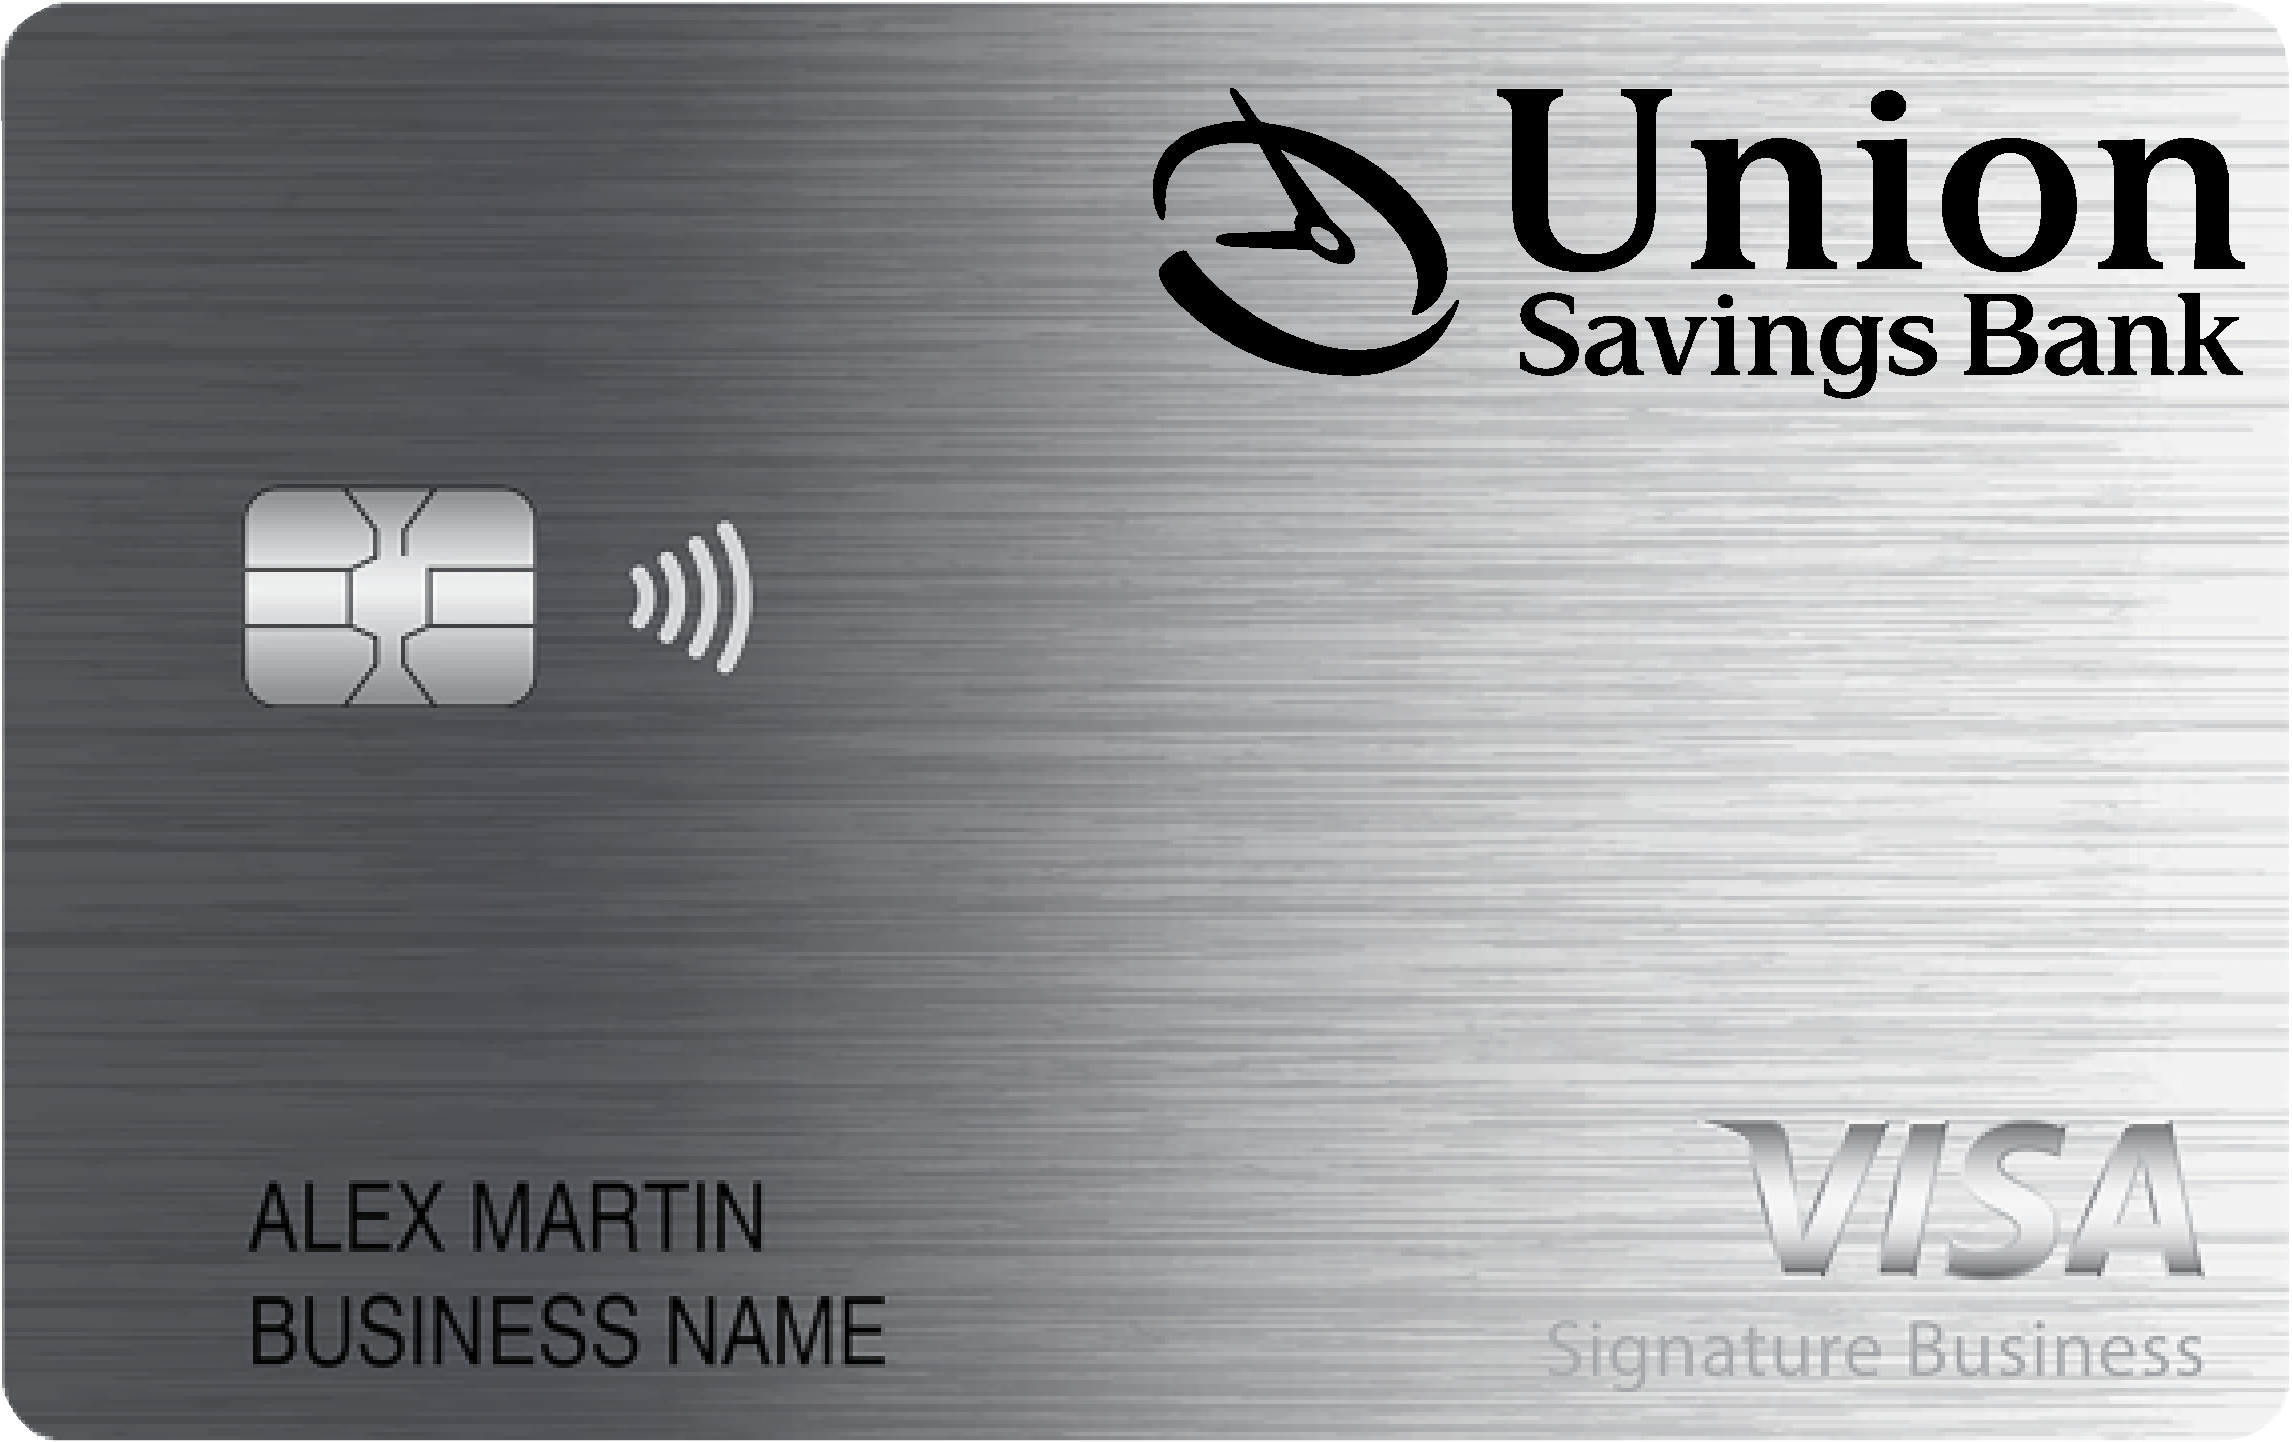 Union Savings Bank Smart Business Rewards Card